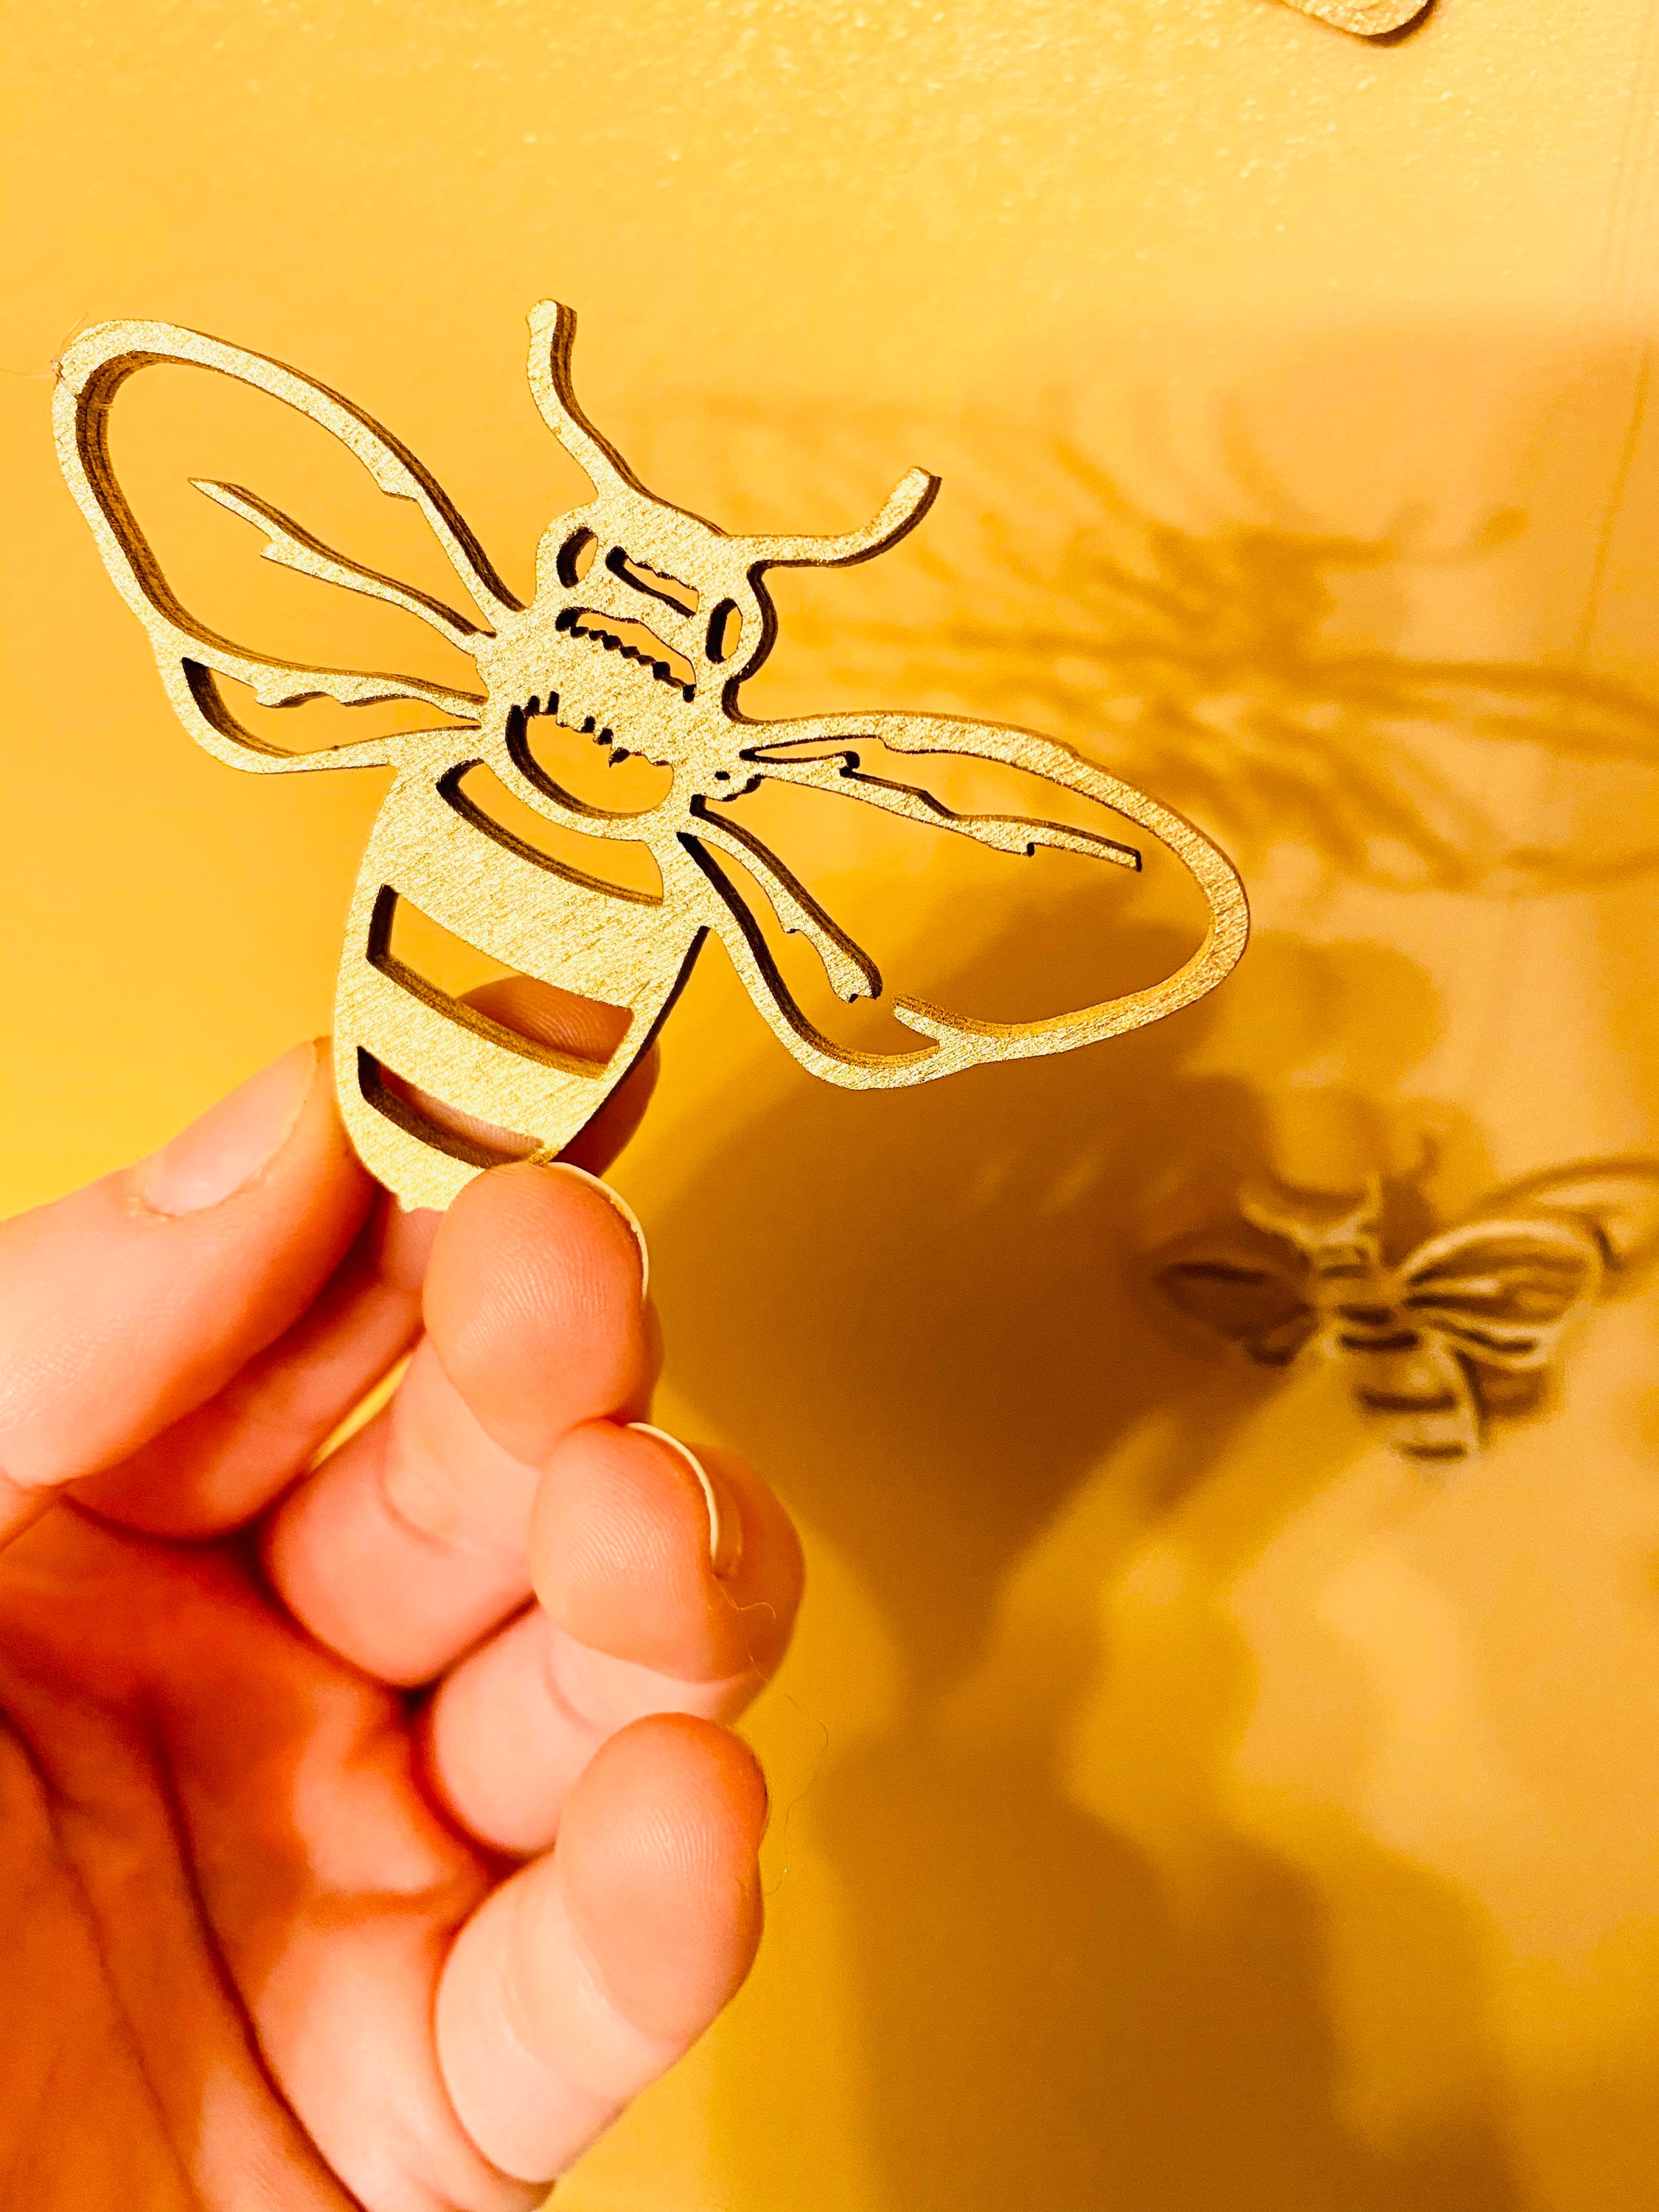 Regal Art & Gift Luster Bee Wall Decor - Honeycomb - Multi - Metal